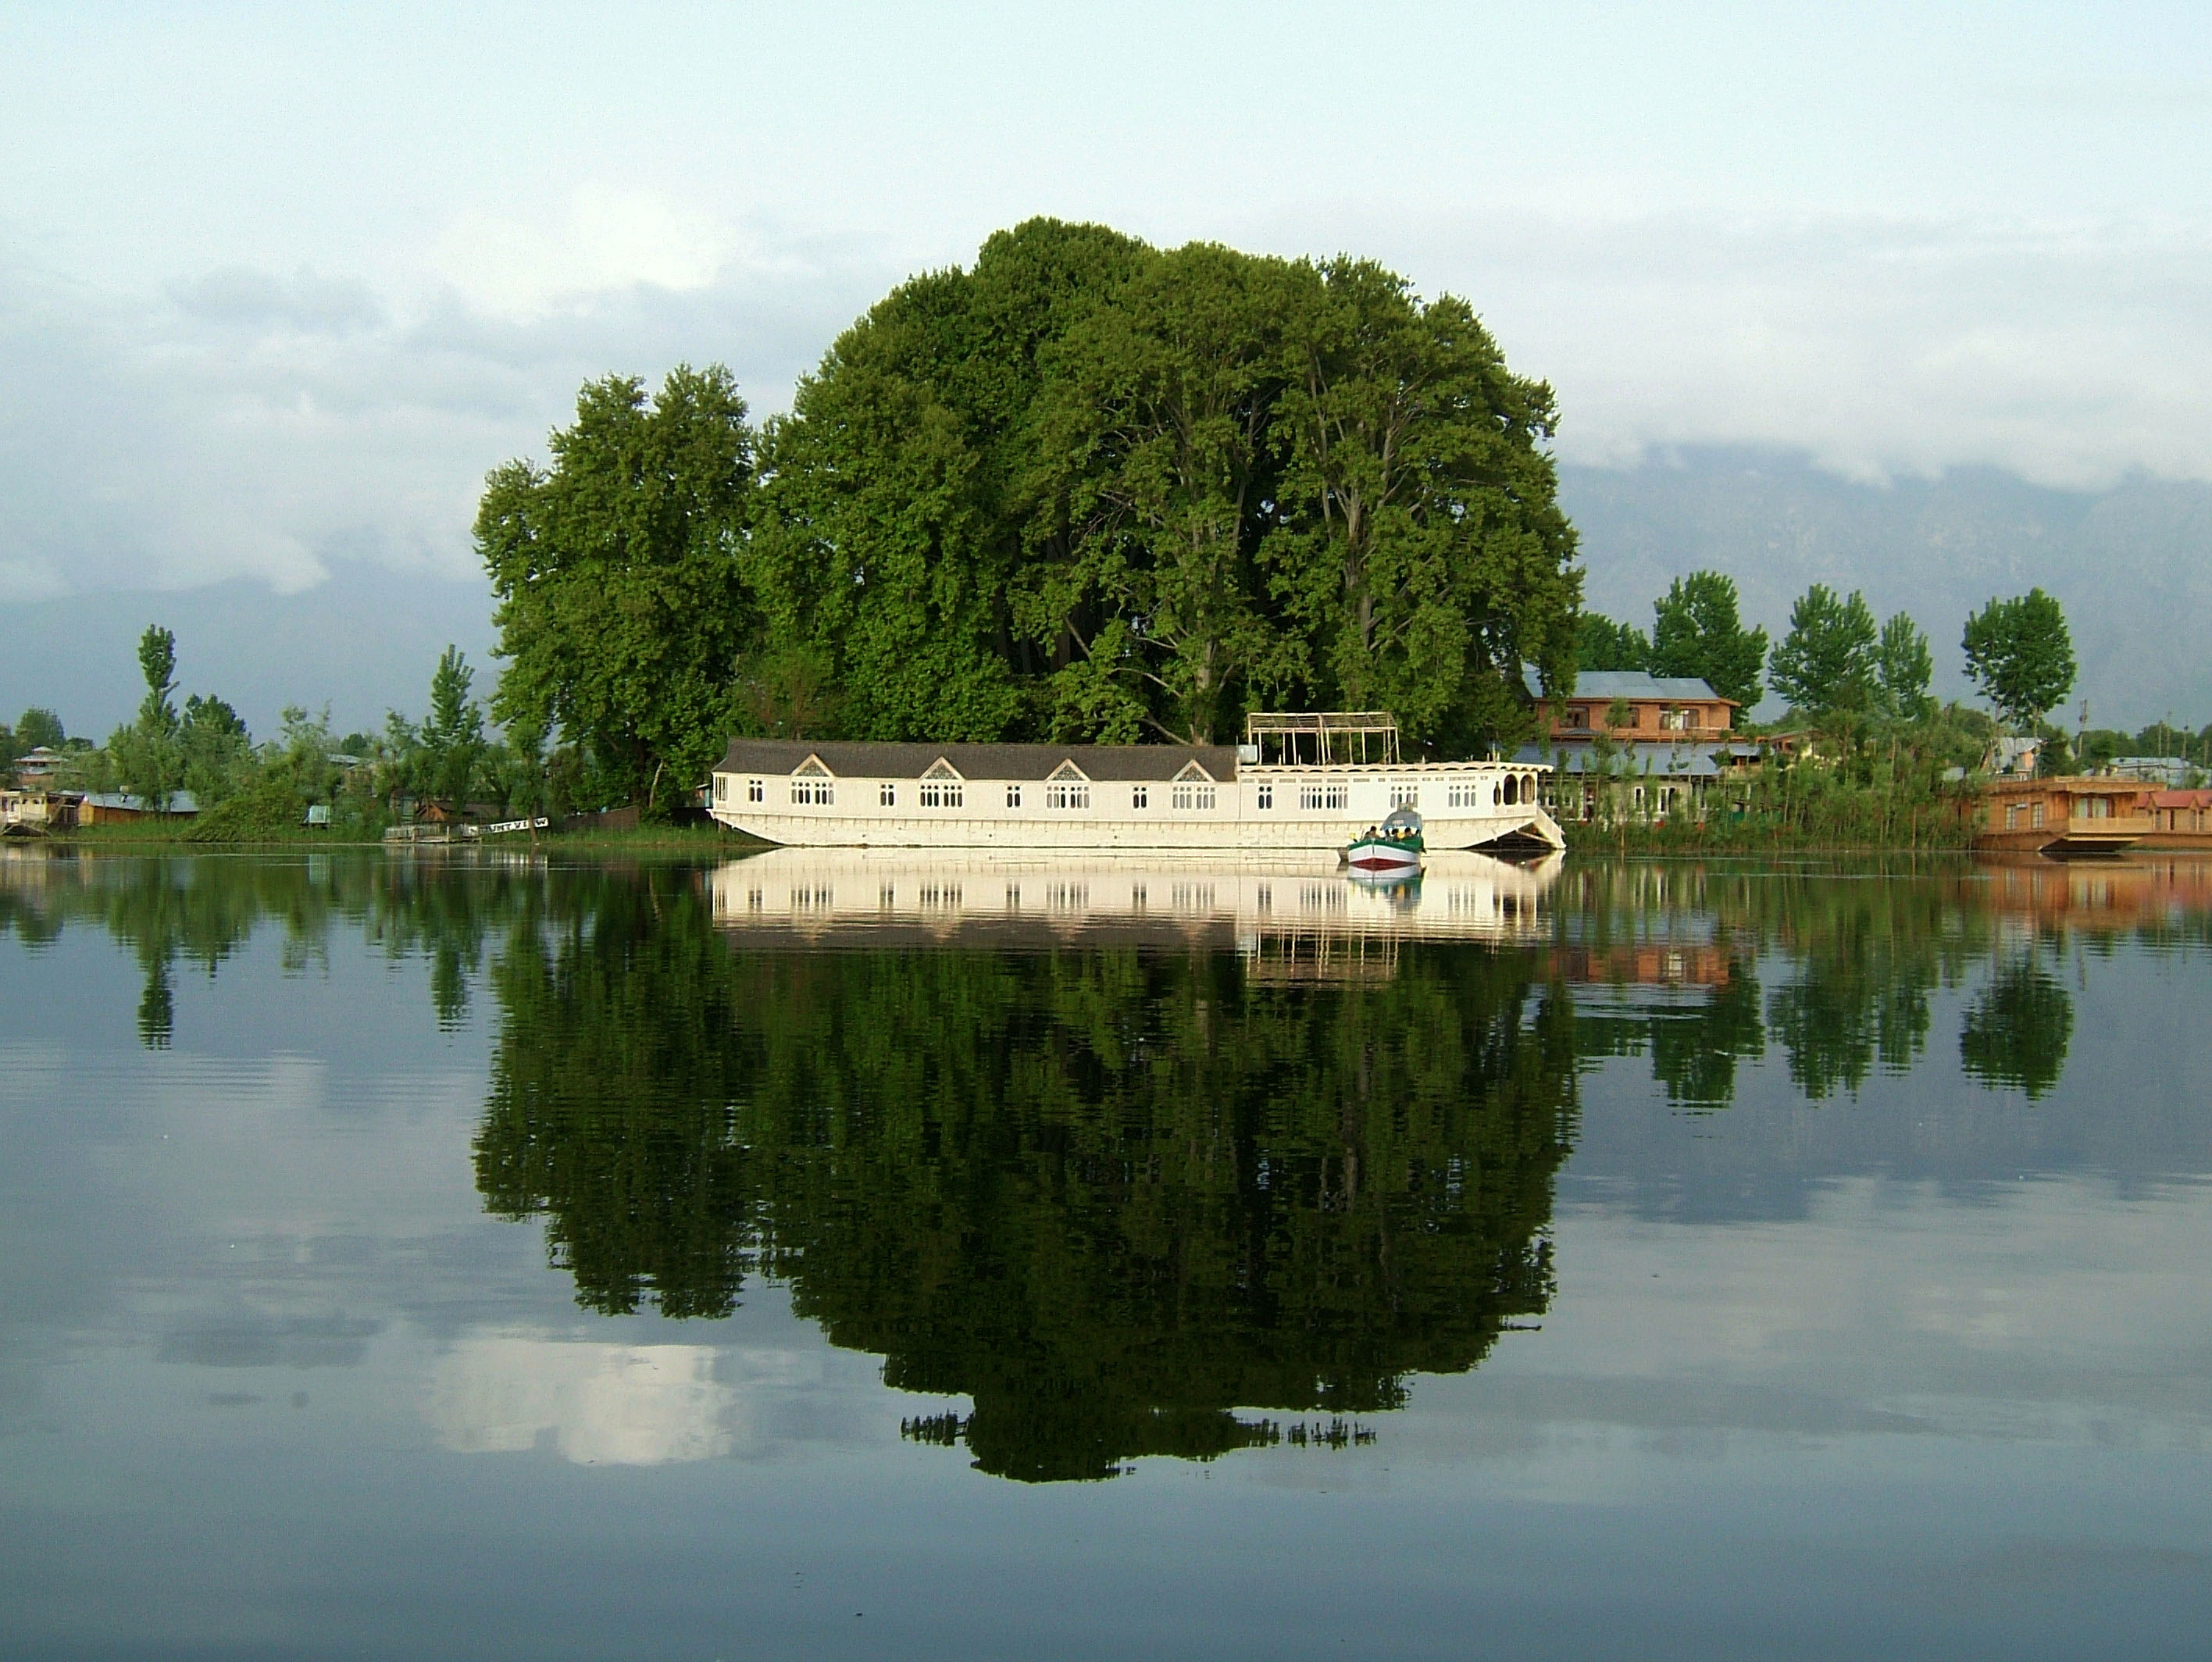 Kashmir houseboats Srinagar Dal lake India Apr 2004 01